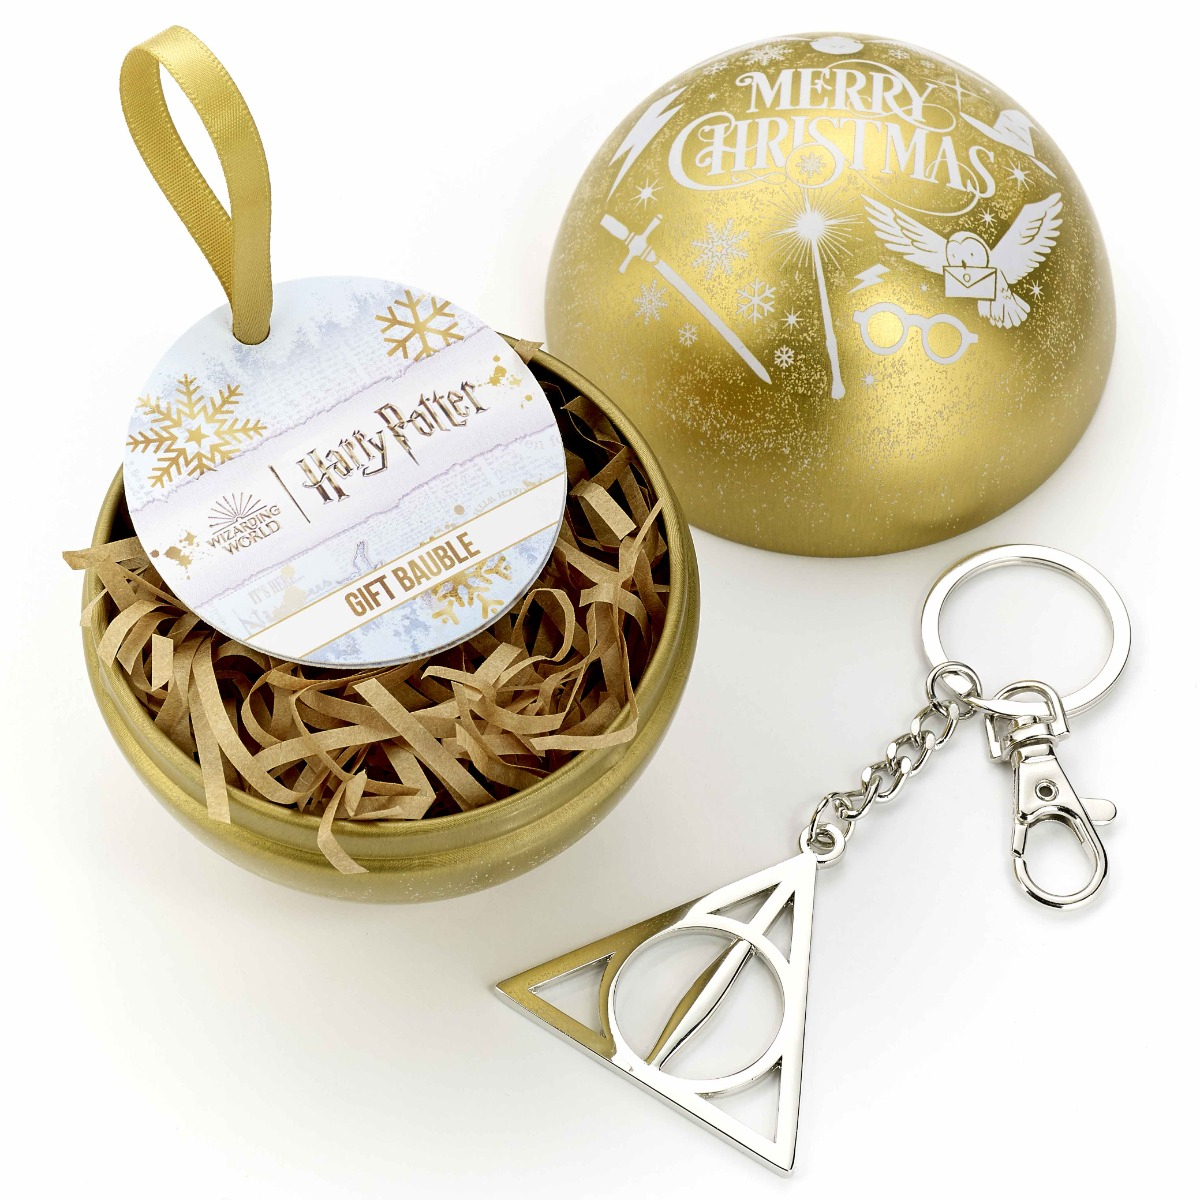 Acheter Harry Potter - Porte-Clef Harry - Porte-Clef prix promo neuf et  occasion pas cher